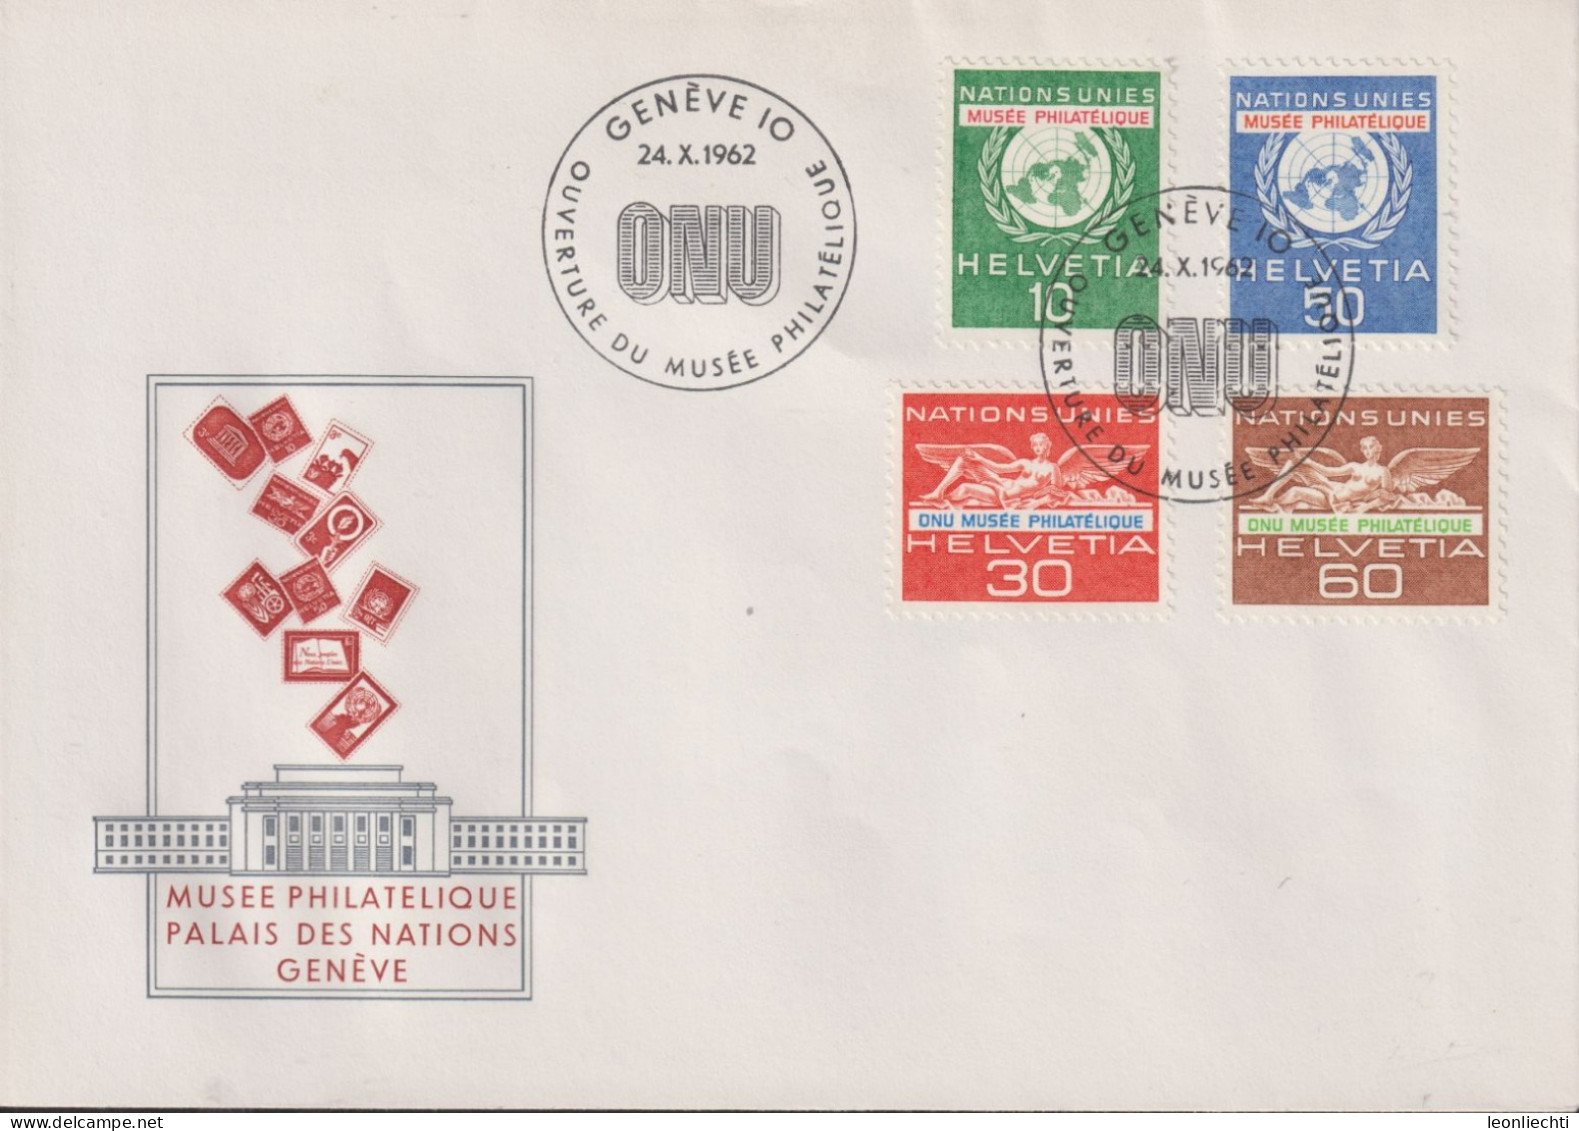 1962 Schweiz FDC, ONU, Zum:ONU 34-37, Mi:ONU 34-37,ⵙ GENÈVE OUVERTURE DU MUSÉE PHILATÉLIQUE - Covers & Documents